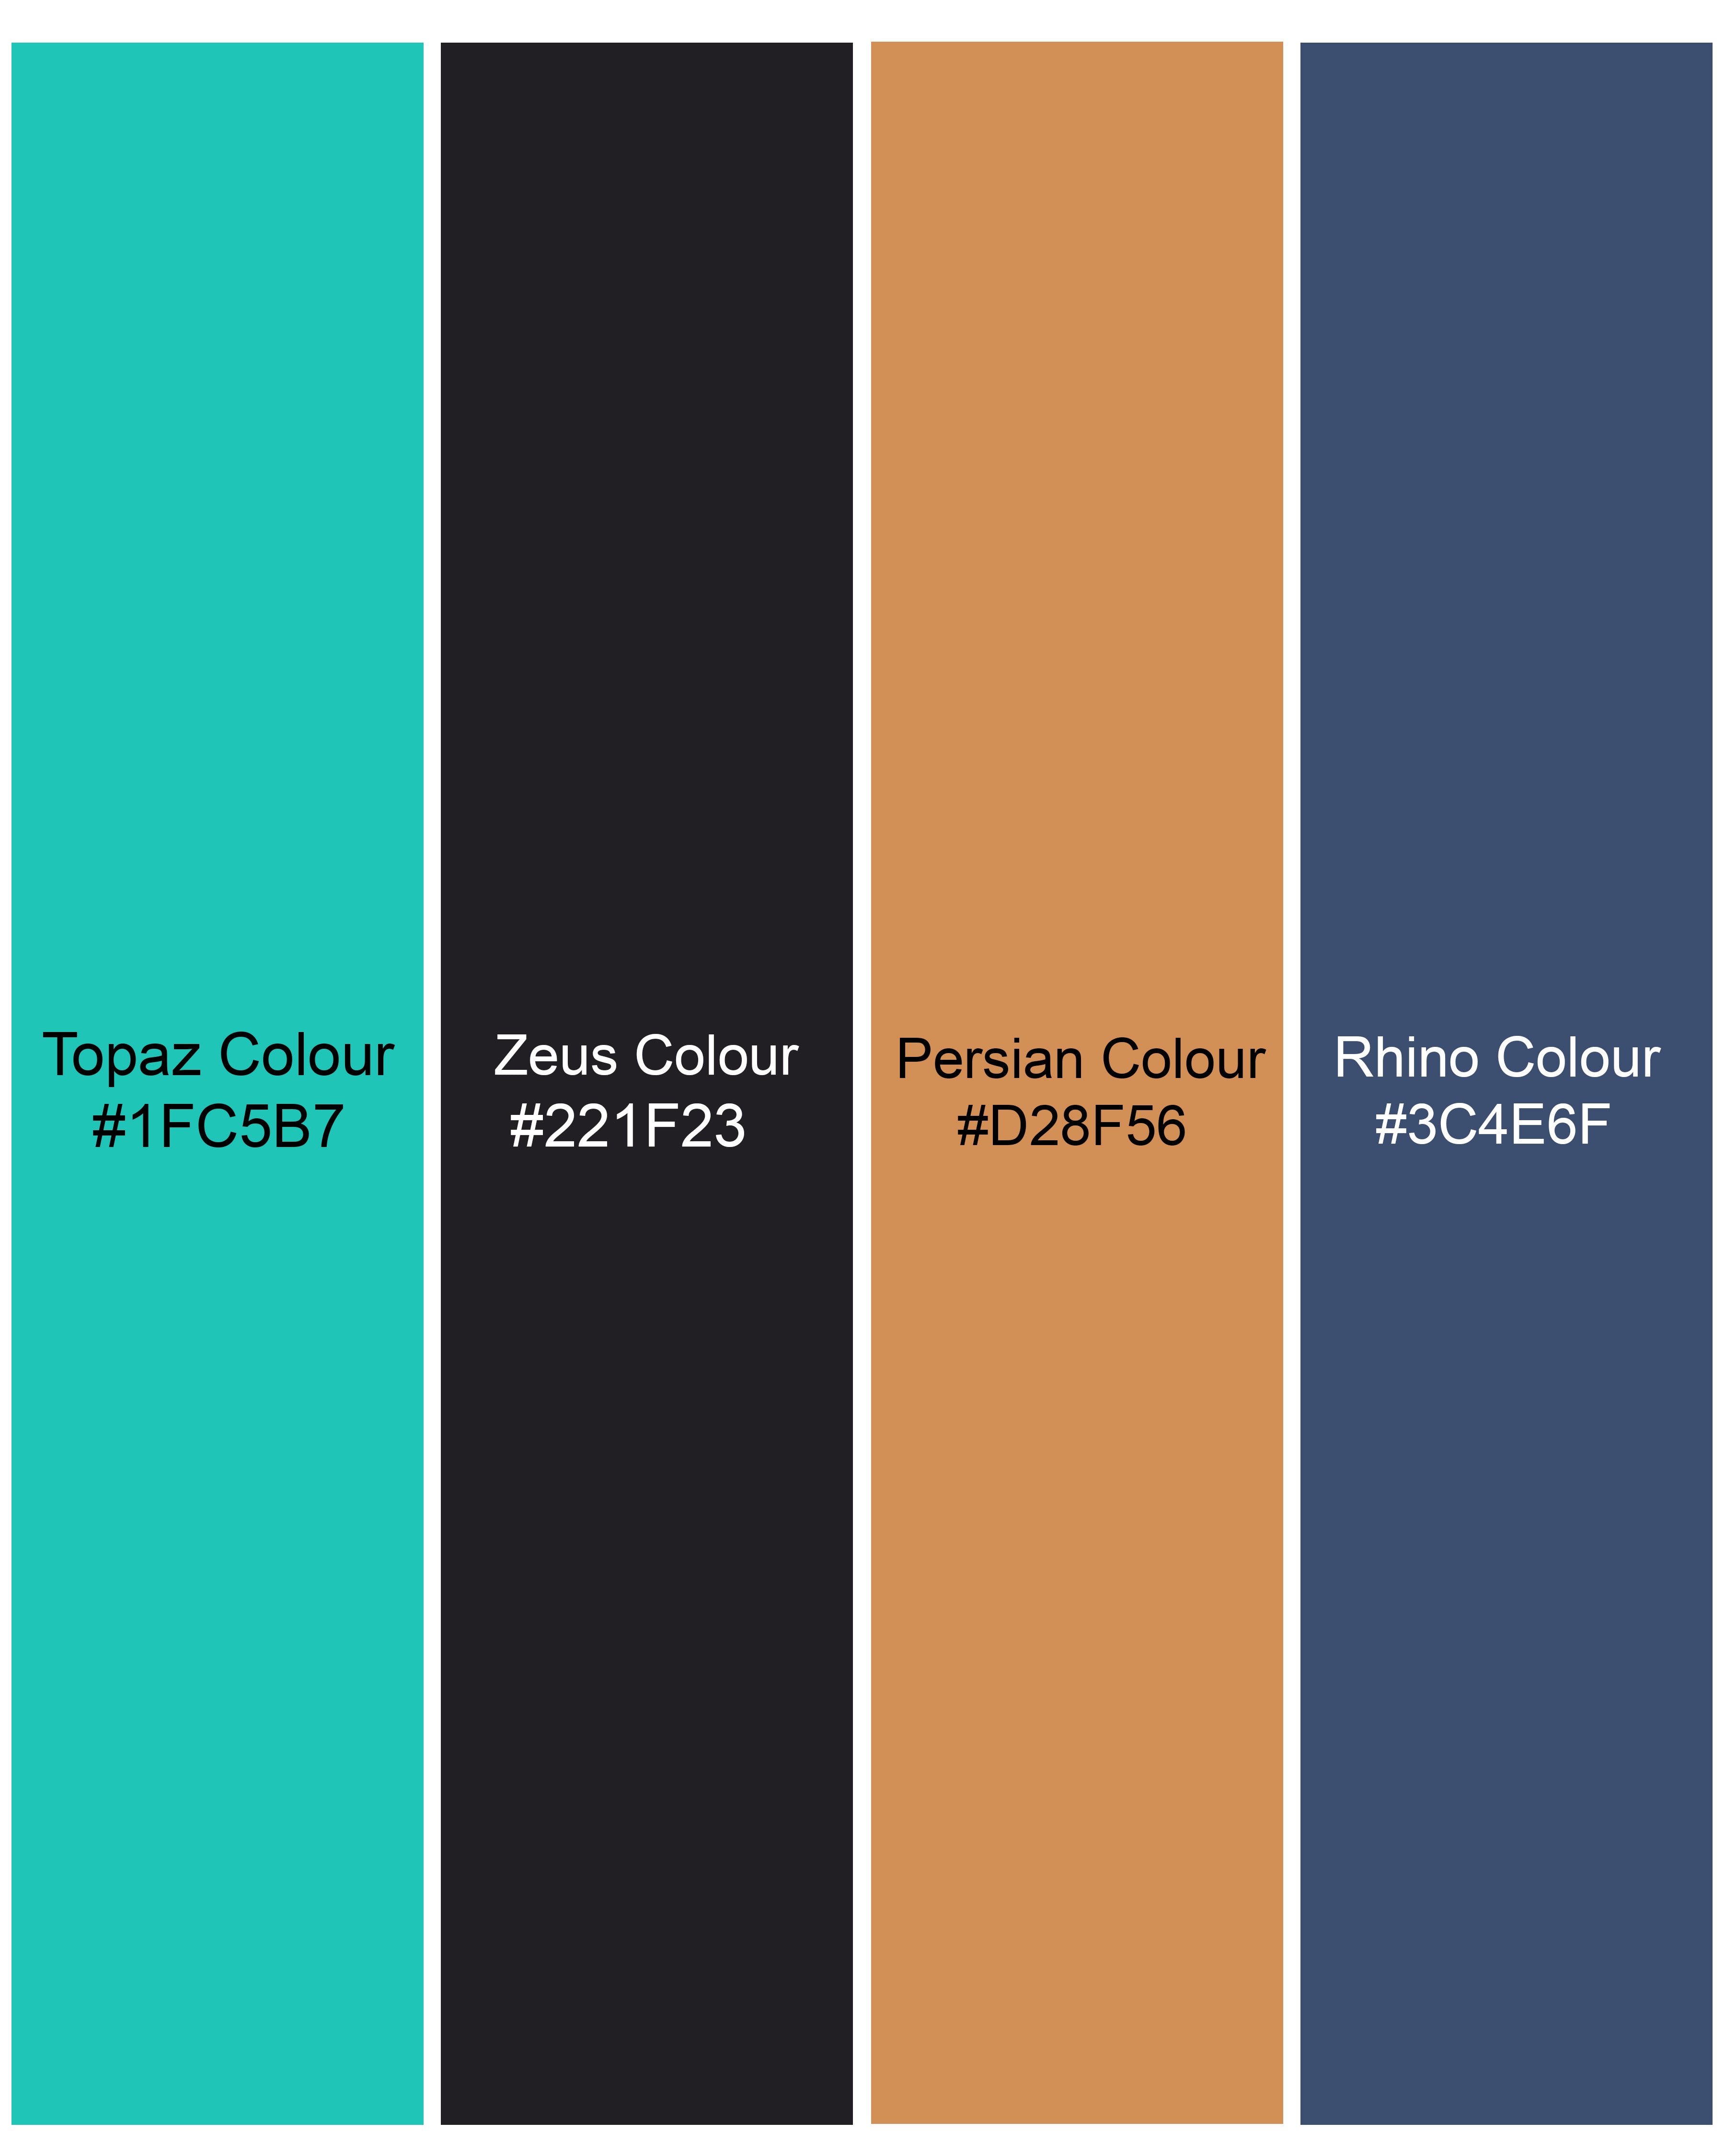 Topaz Green with Rhino Blue Multicolour Printed Super Soft Premium Cotton Shirt  8799-P47-38,8799-P47-H-38,8799-P47-39,8799-P47-H-39,8799-P47-40,8799-P47-H-40,8799-P47-42,8799-P47-H-42,8799-P47-44,8799-P47-H-44,8799-P47-46,8799-P47-H-46,8799-P47-48,8799-P47-H-48,8799-P47-50,8799-P47-H-50,8799-P47-52,8799-P47-H-52